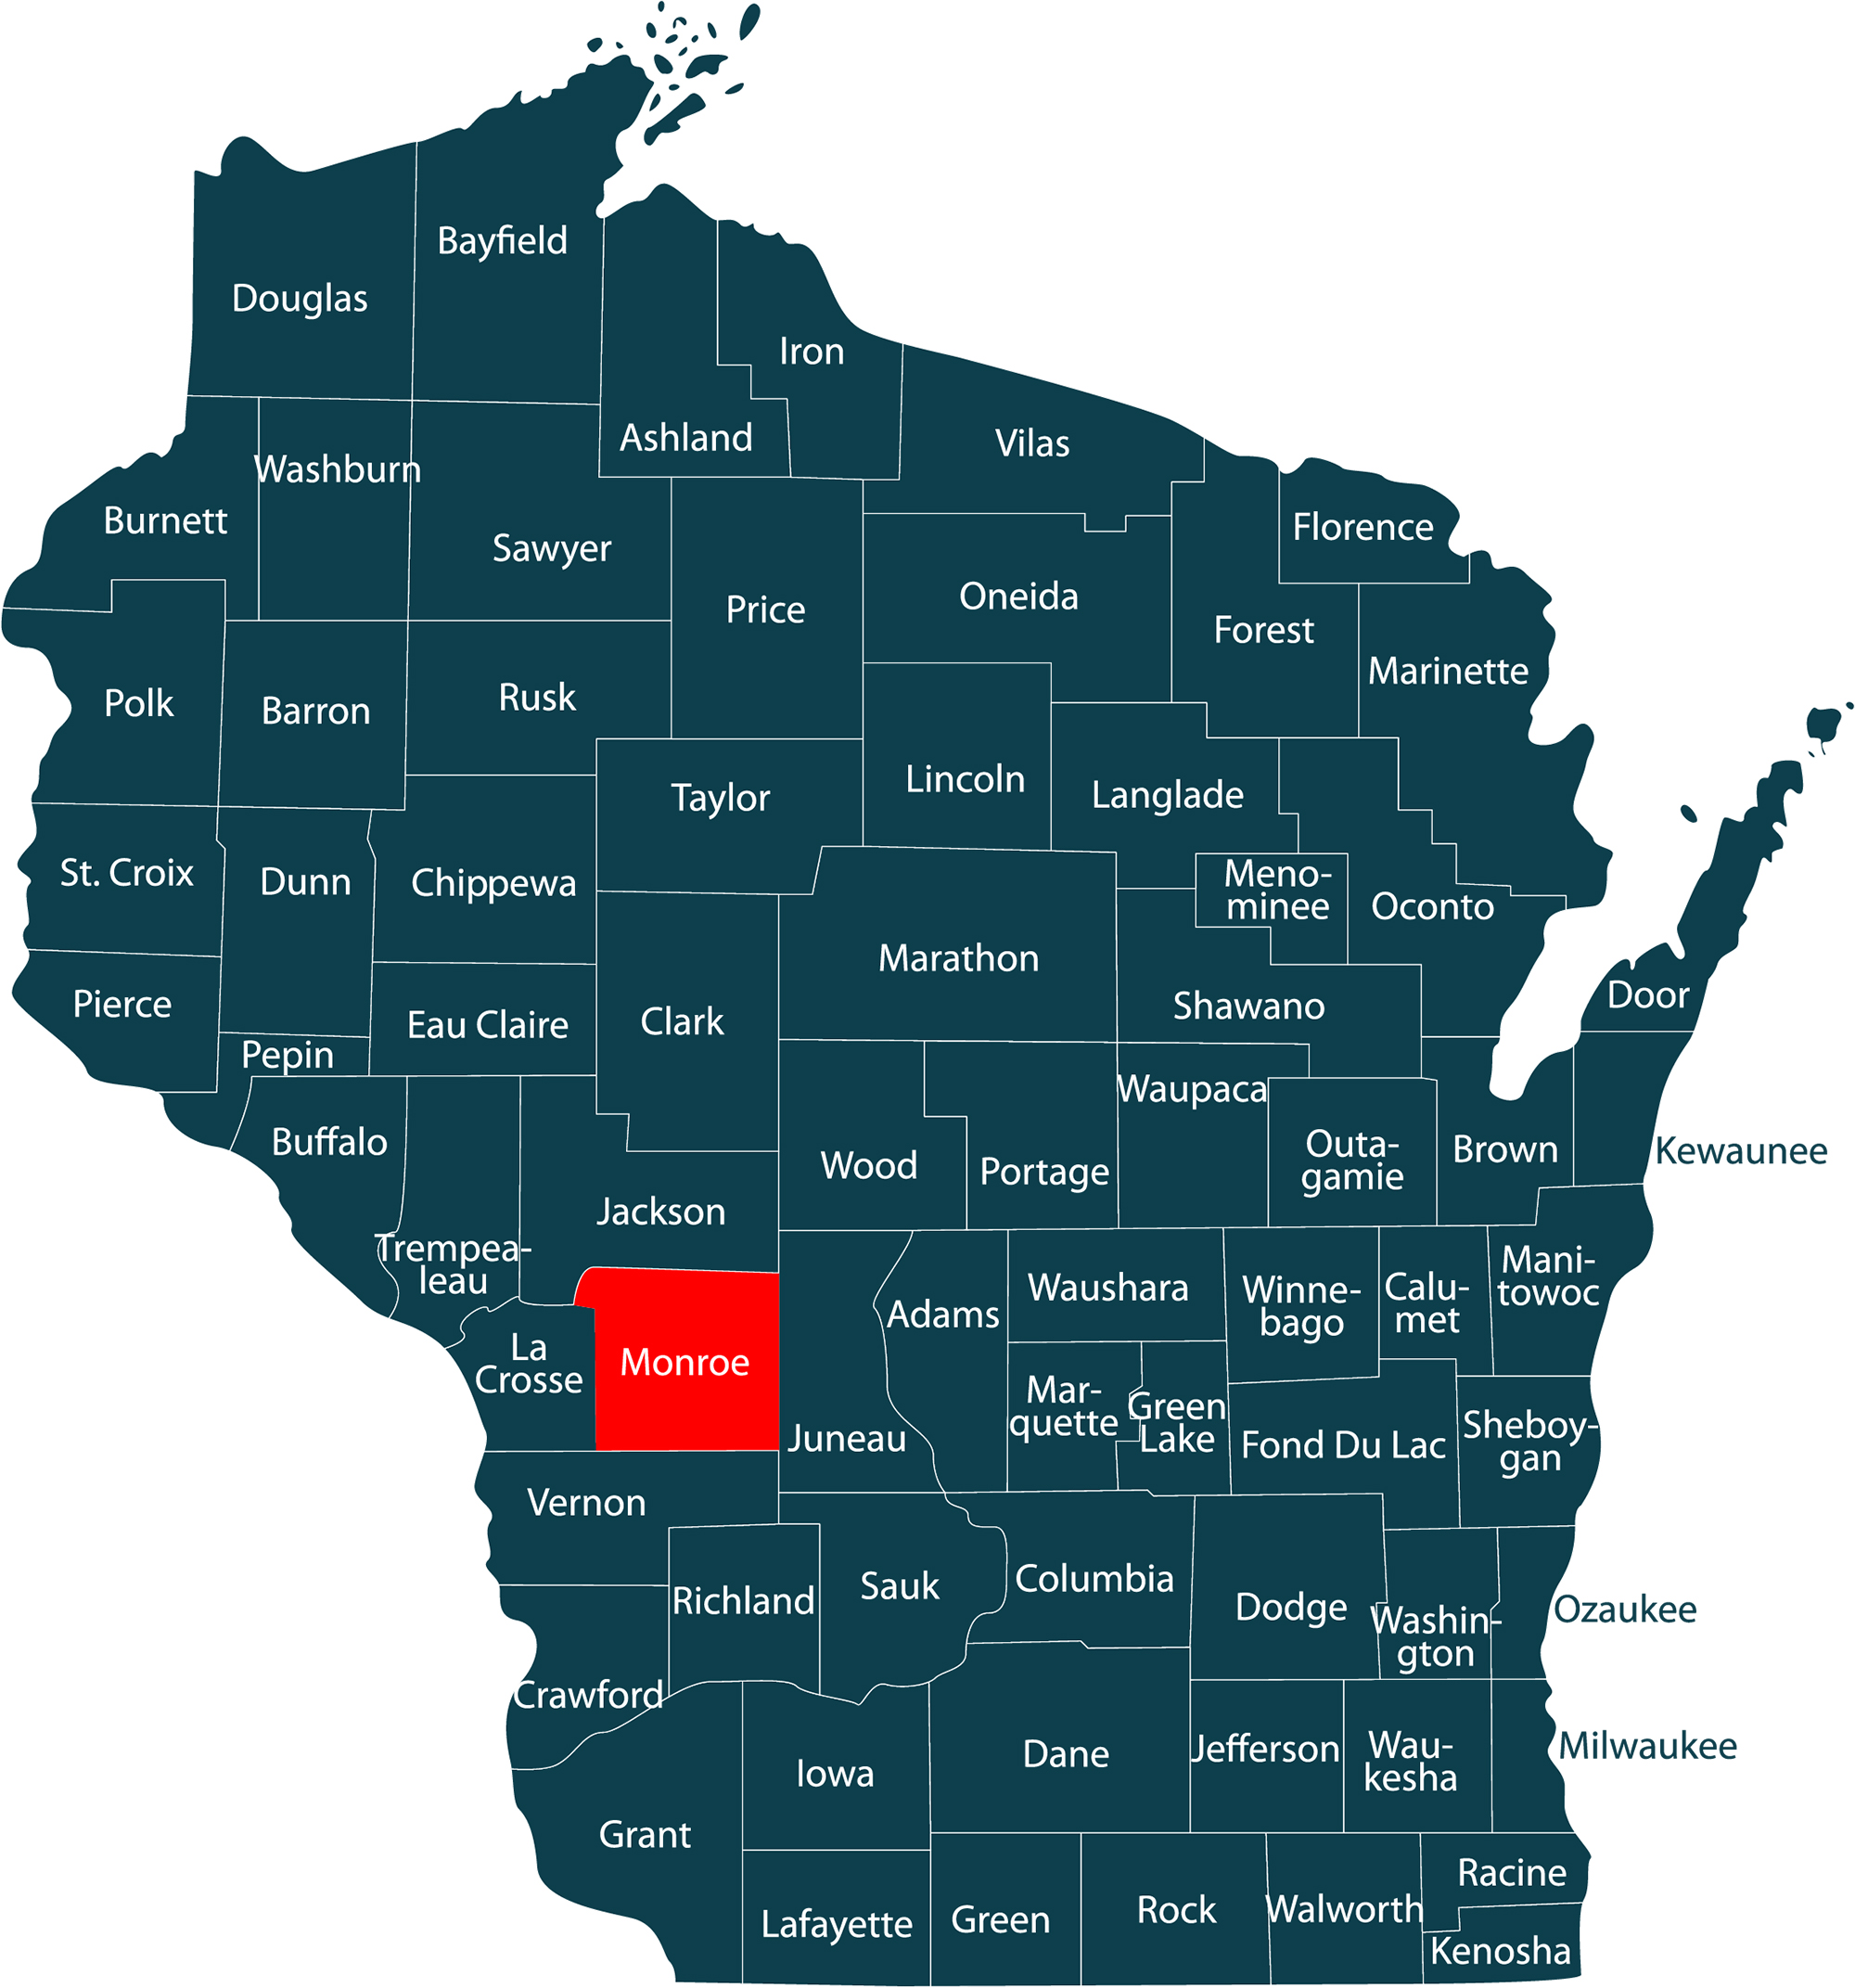 Monroe County Wisconsin @ wisconsin.com